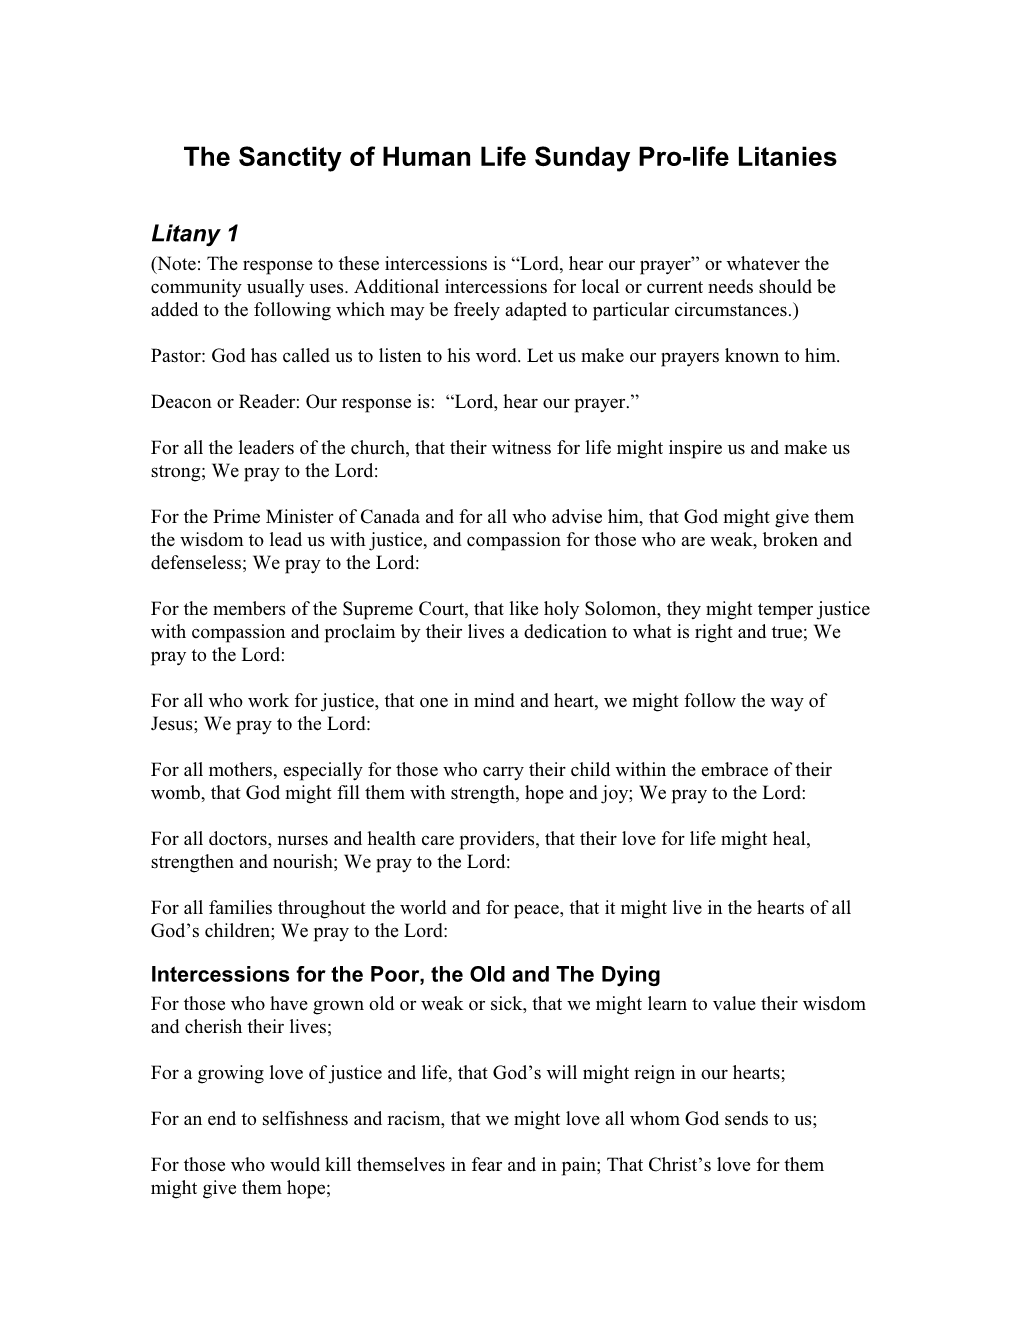 The Sanctity of Human Life Sunday Pro-Life Litanies